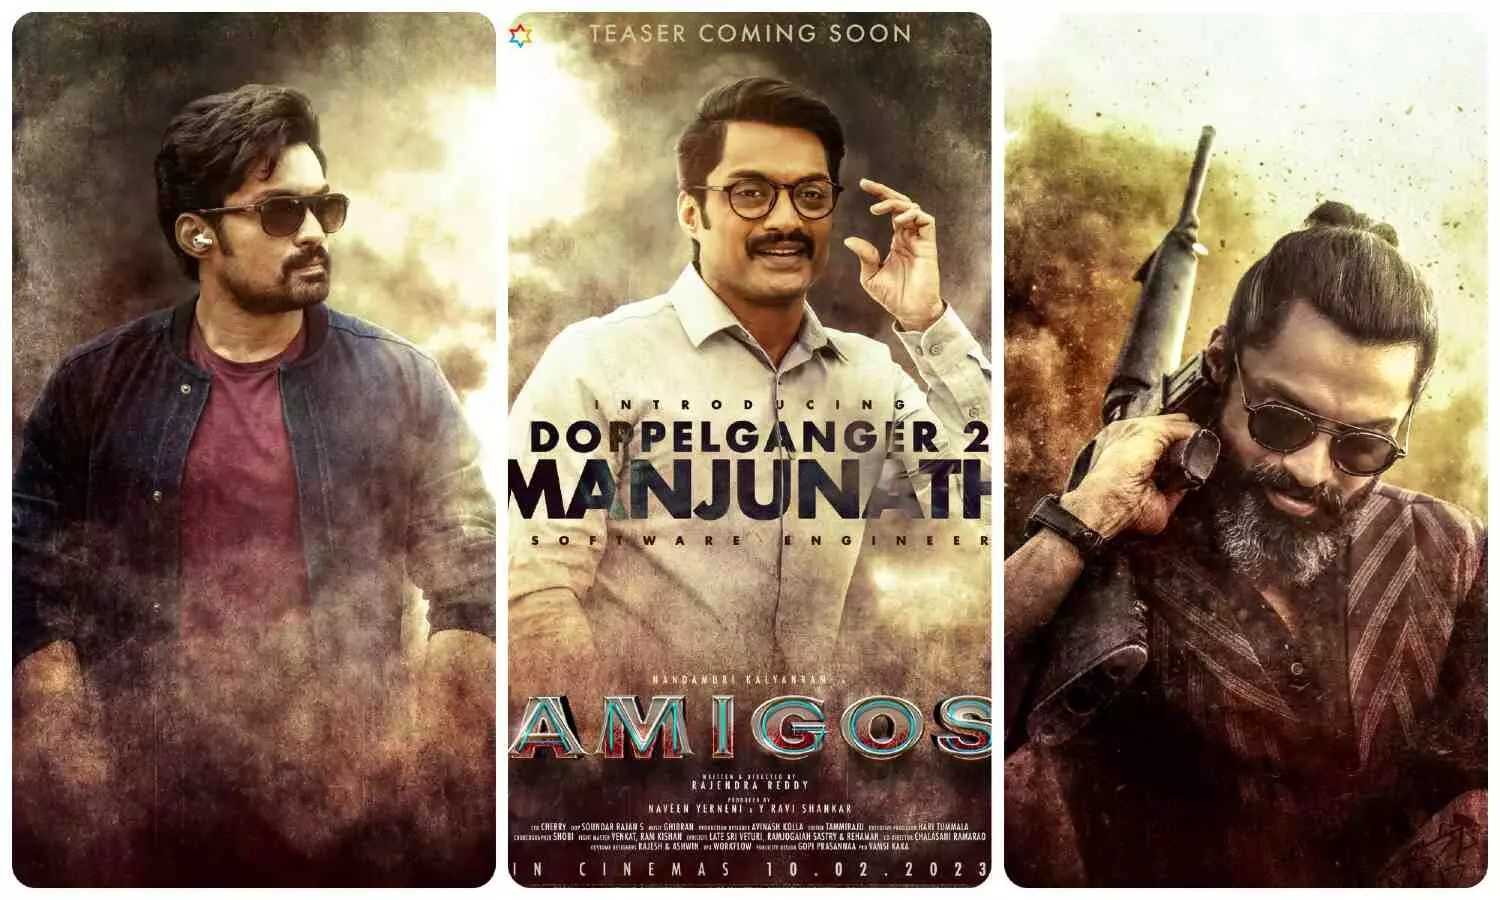 Amigos: కల్యాణ్ రామ్ సినిమా టీజర్ రిలీజ్ డేట్ | Kalyan Ram's 3 looks from Amigos  Movie have been released